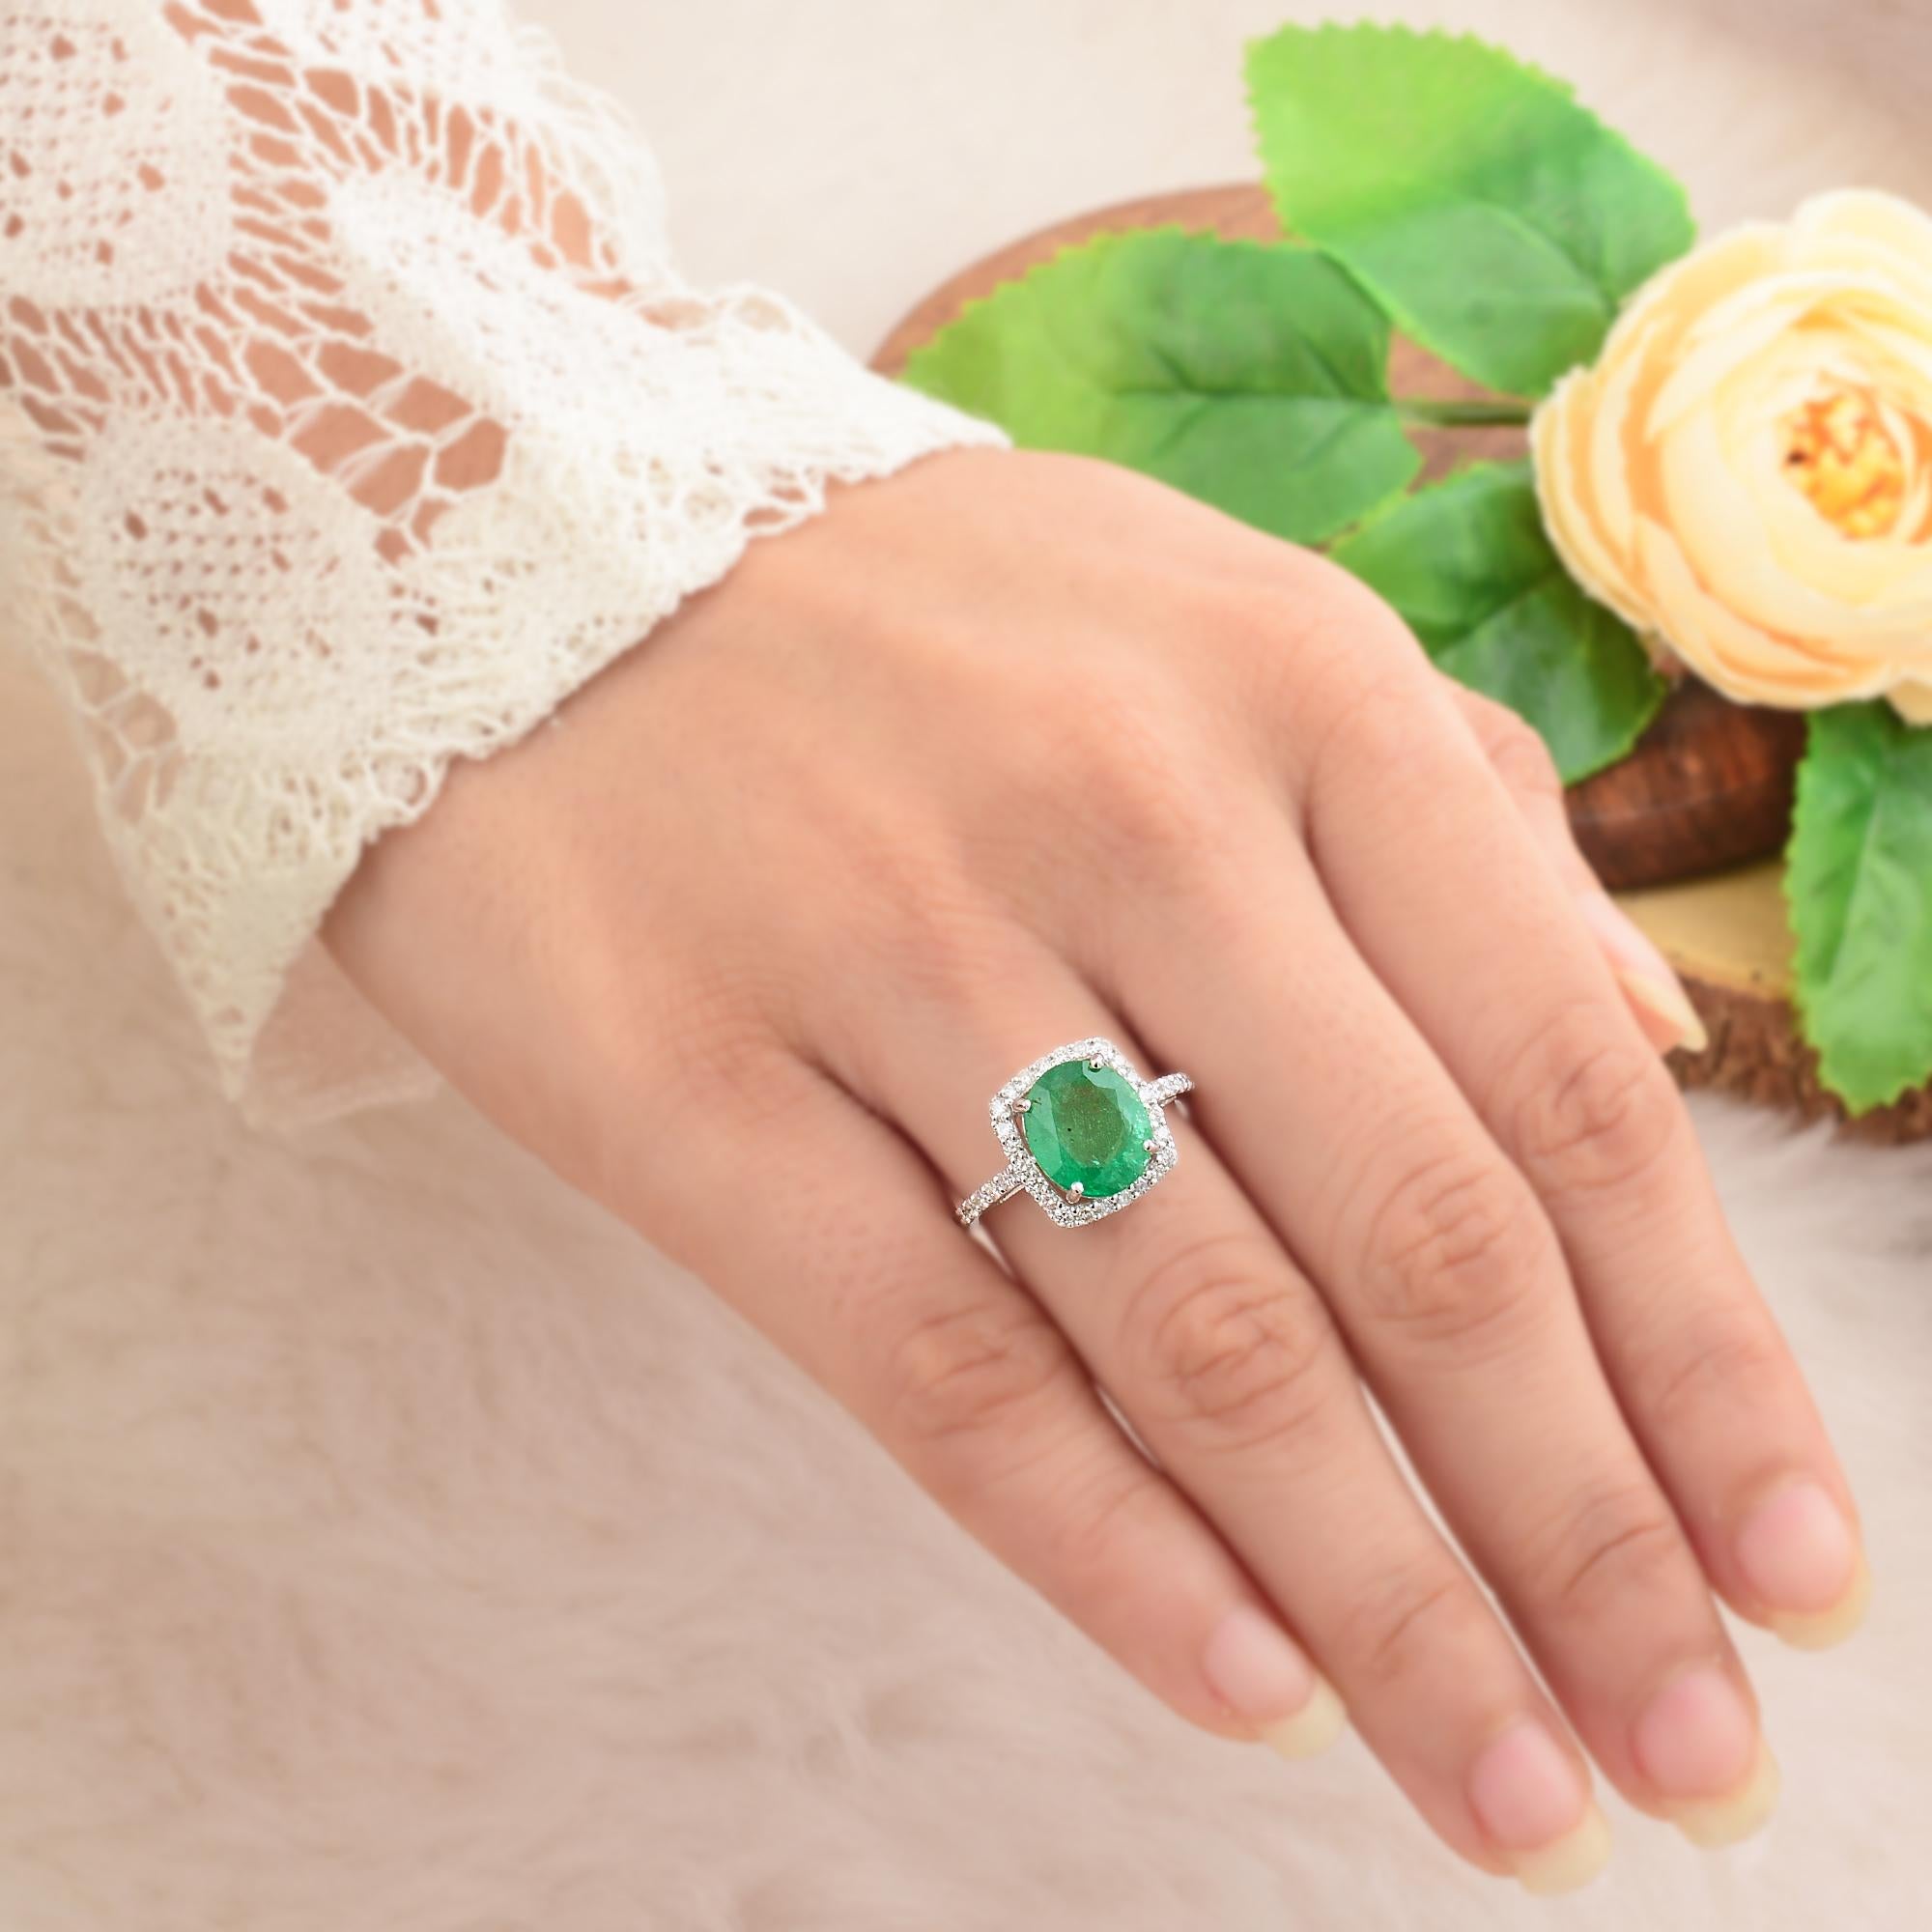 Women's Natural Emerald Gemstone Ring Diamond Solid 10 Karat White Gold Handmade Jewelry For Sale